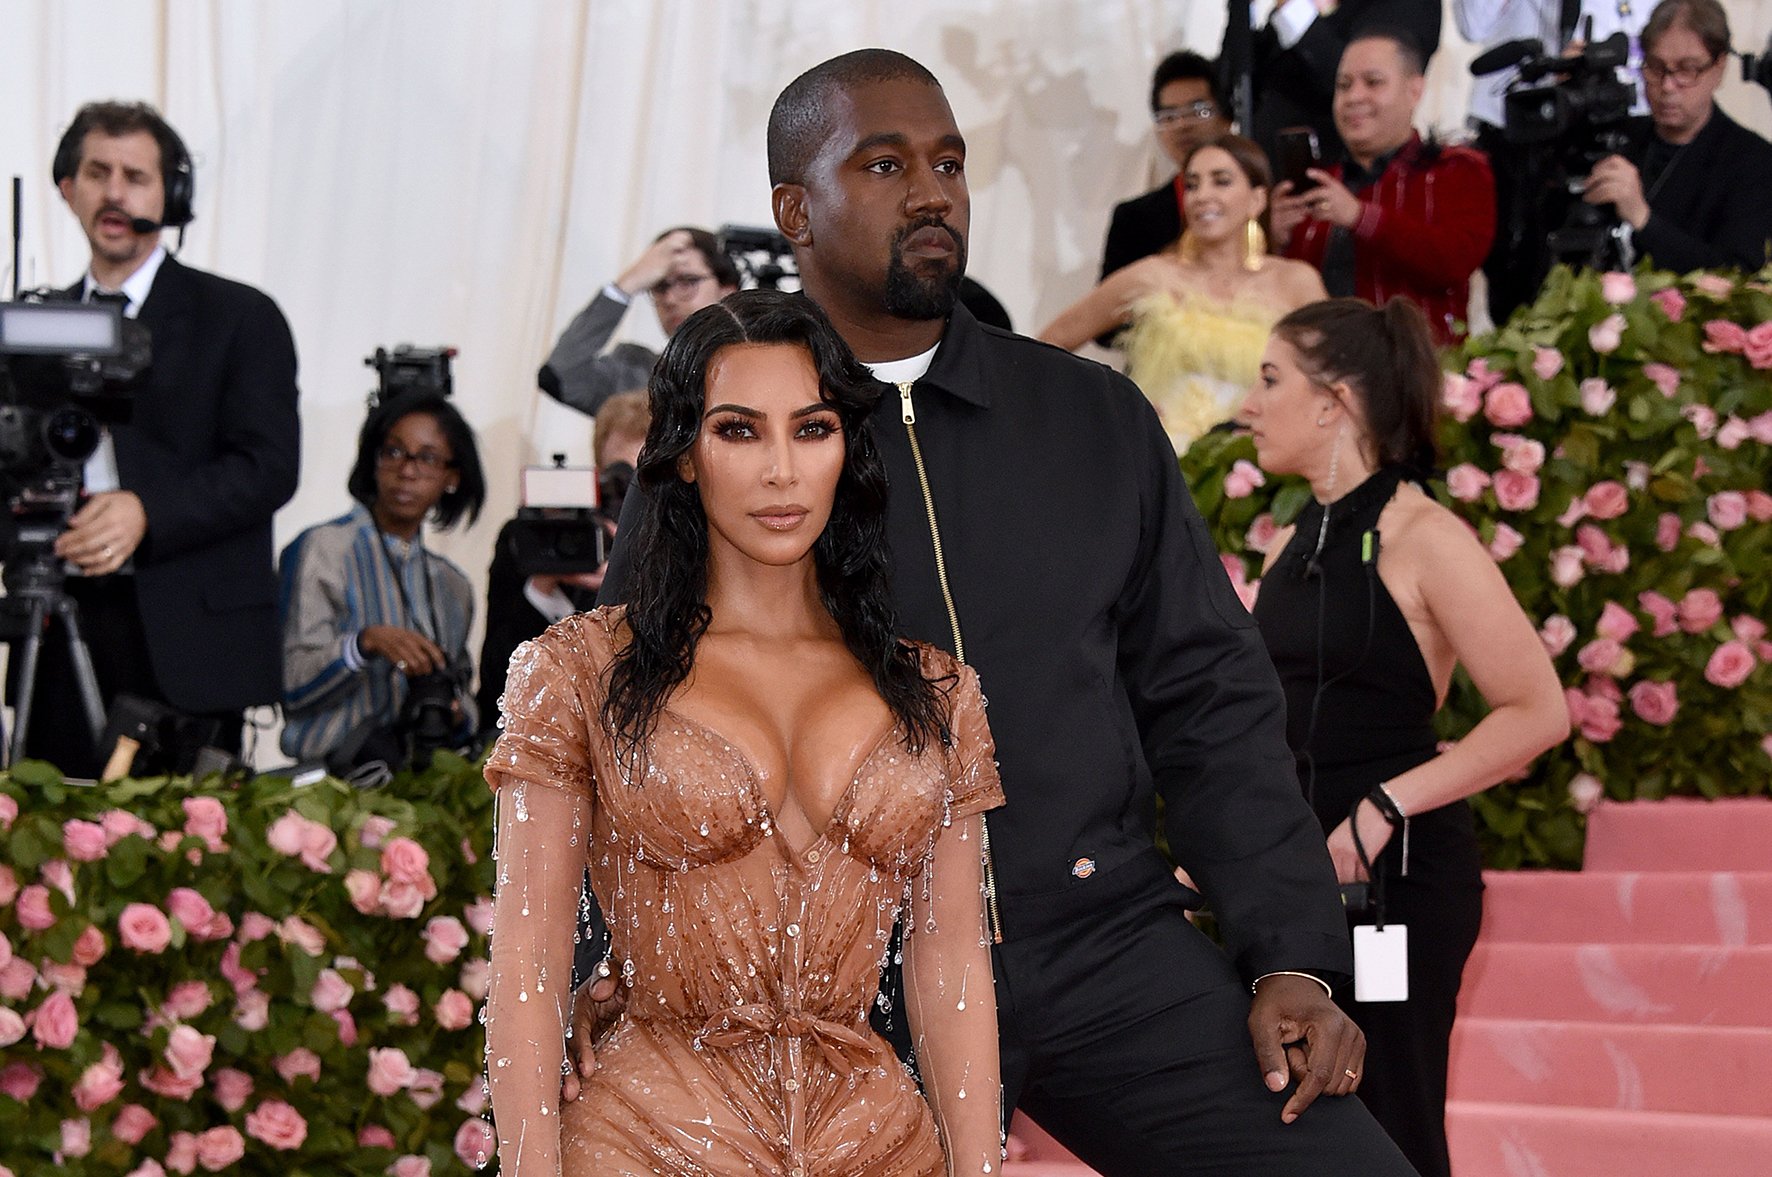 anye West & Kim Kardashian at the 2019 Met Gala, New York City | Photo: Getty Images